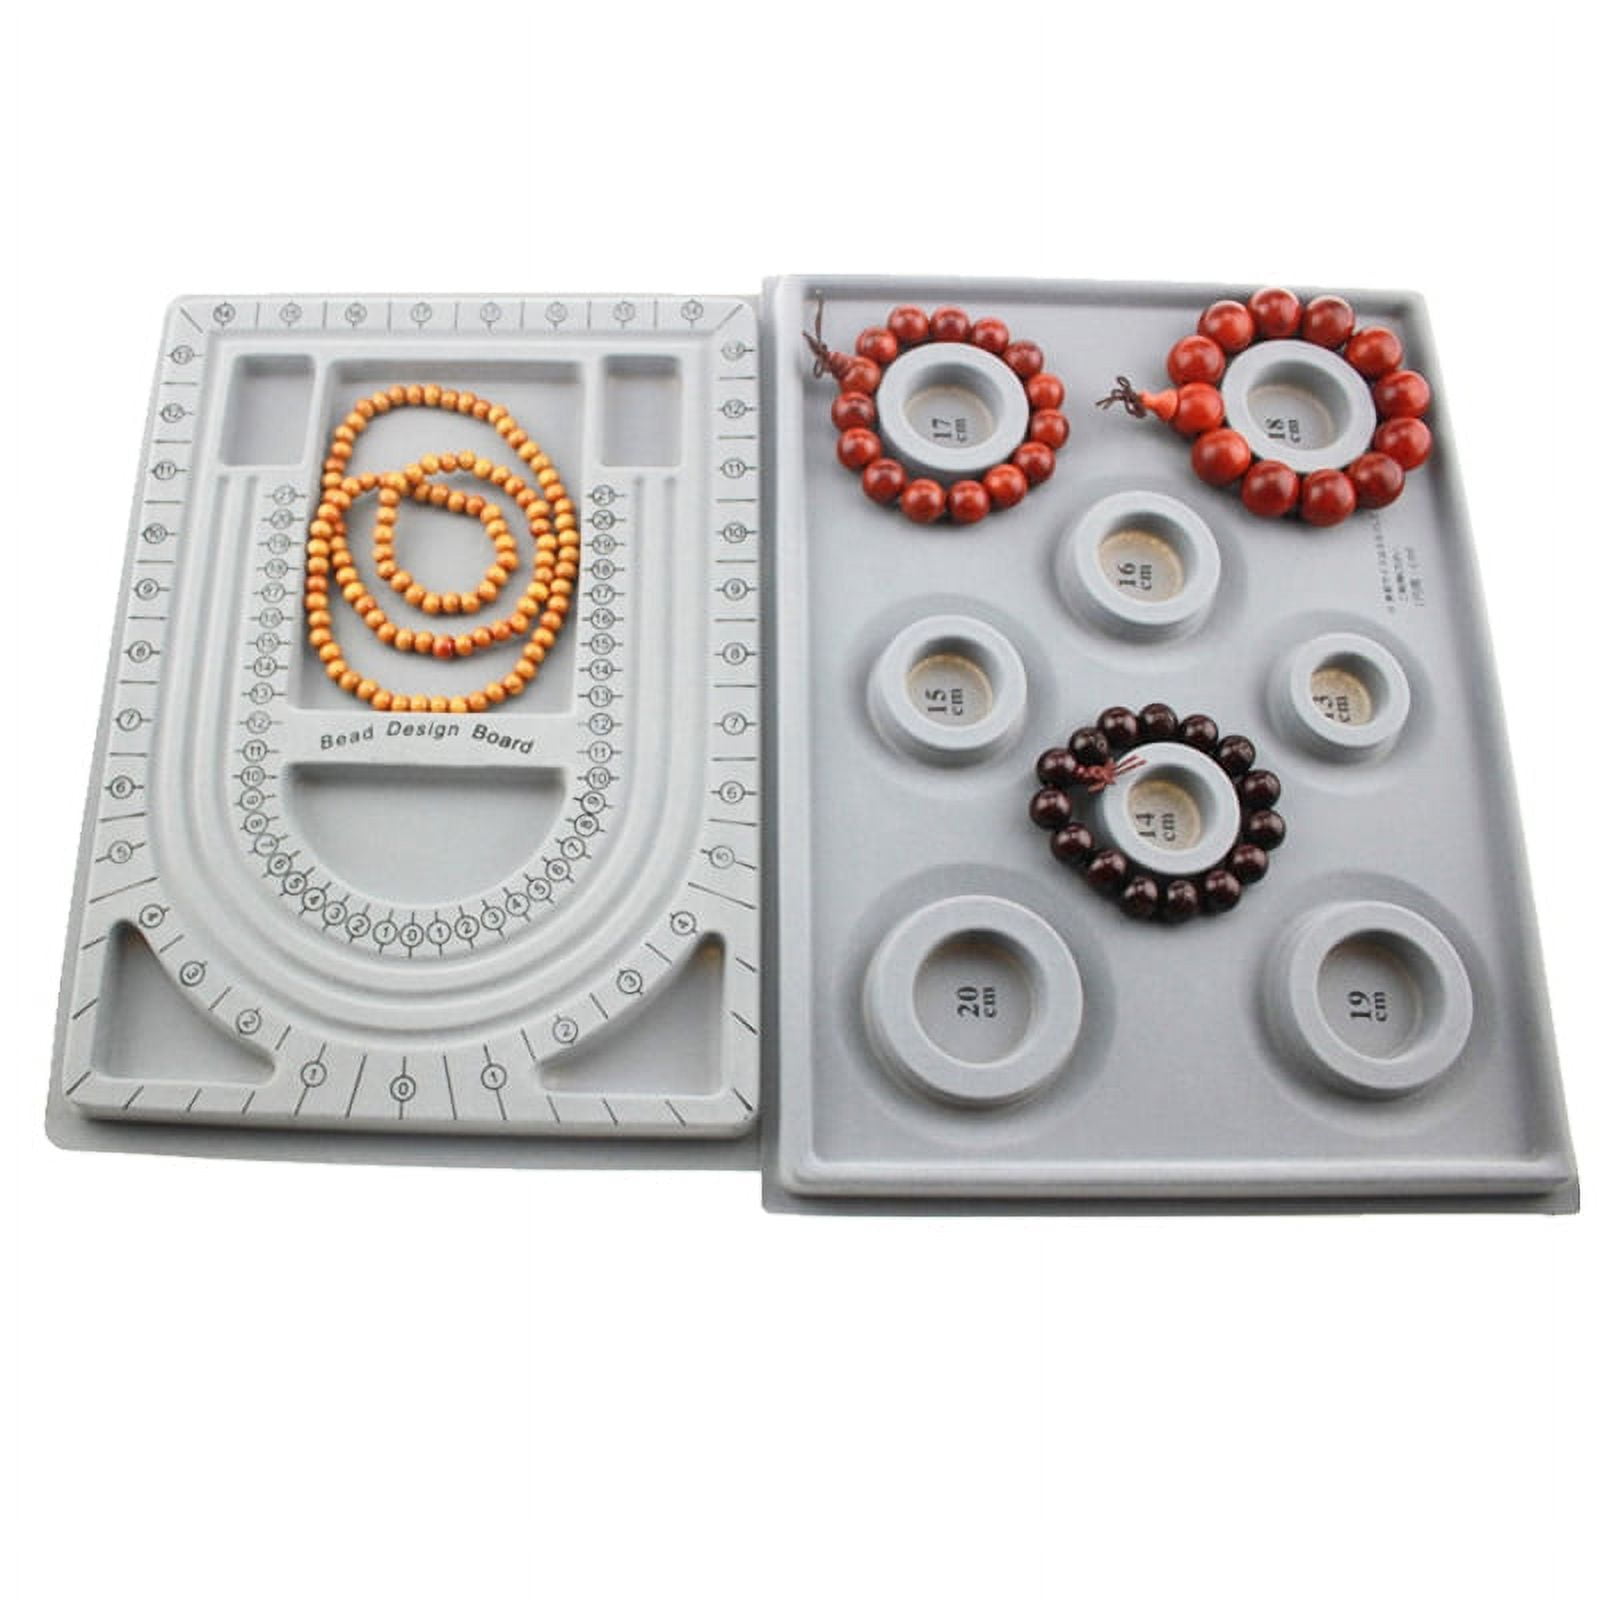 Yasumai yasumai bead tray design flocked board set for jewelry making  repair kit diy bracelet necklace craft measuring tool jewelers